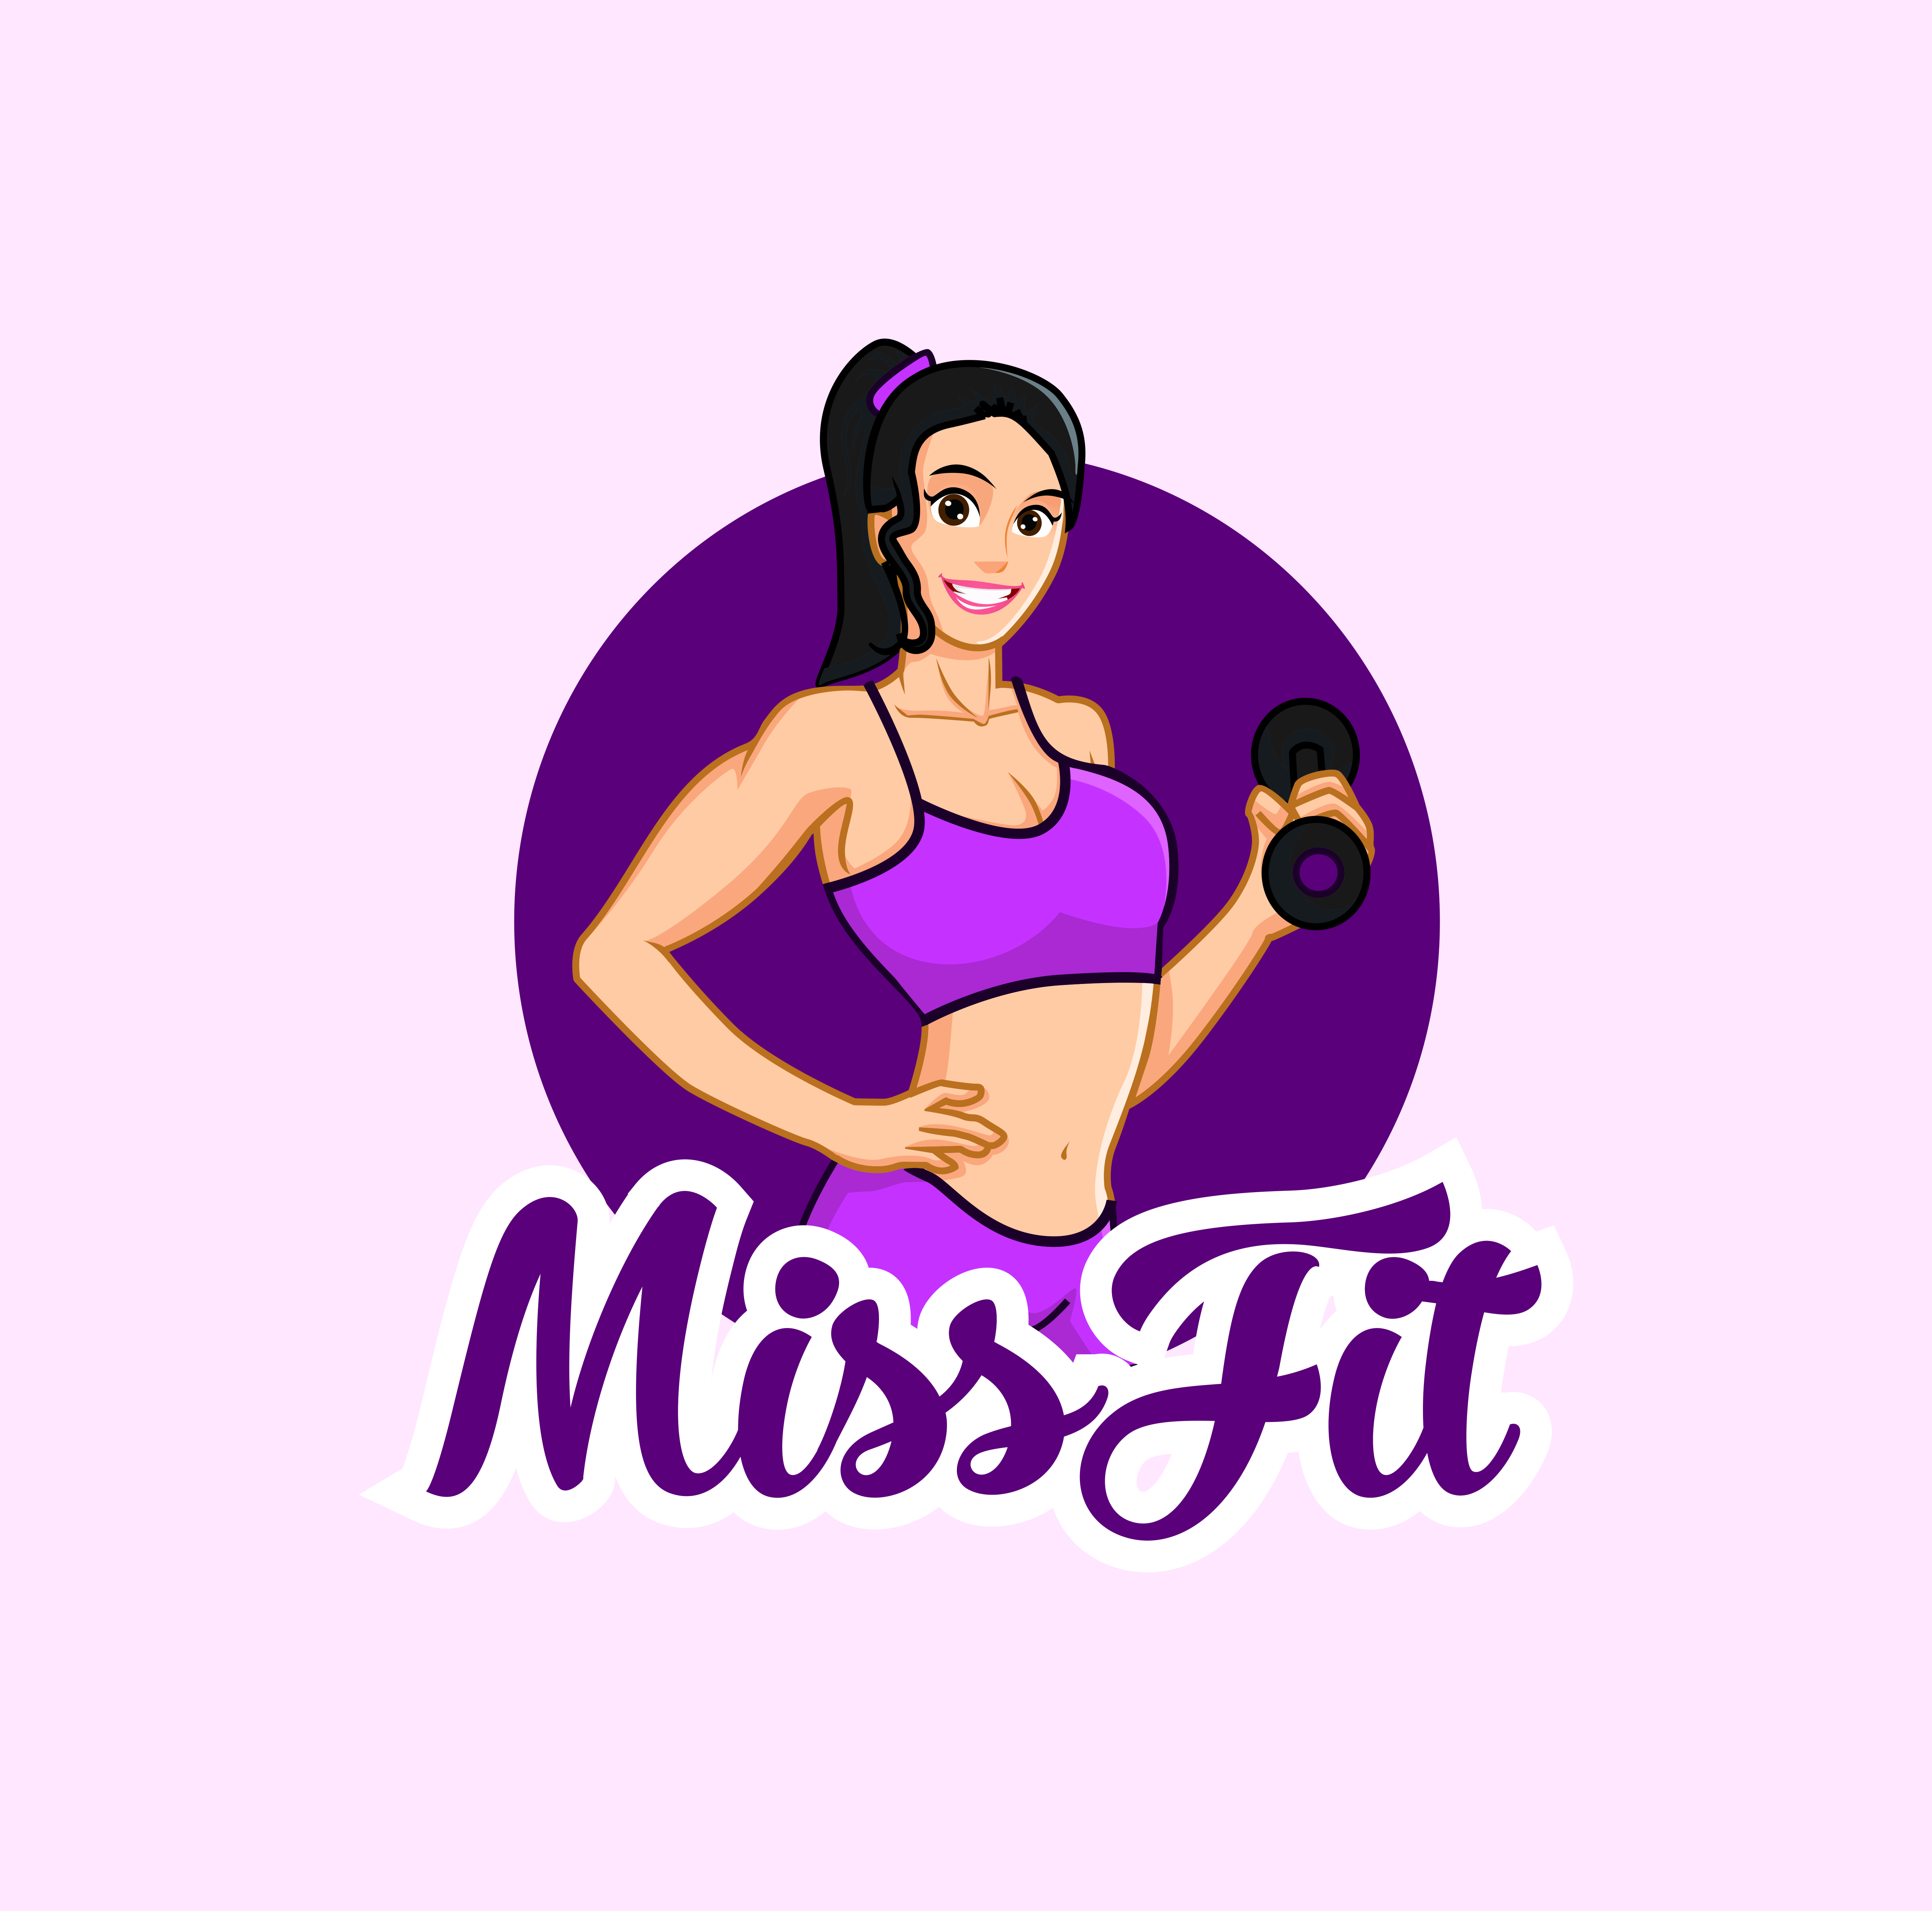 Fitness Women Character Logo Mascot Designs Download Free